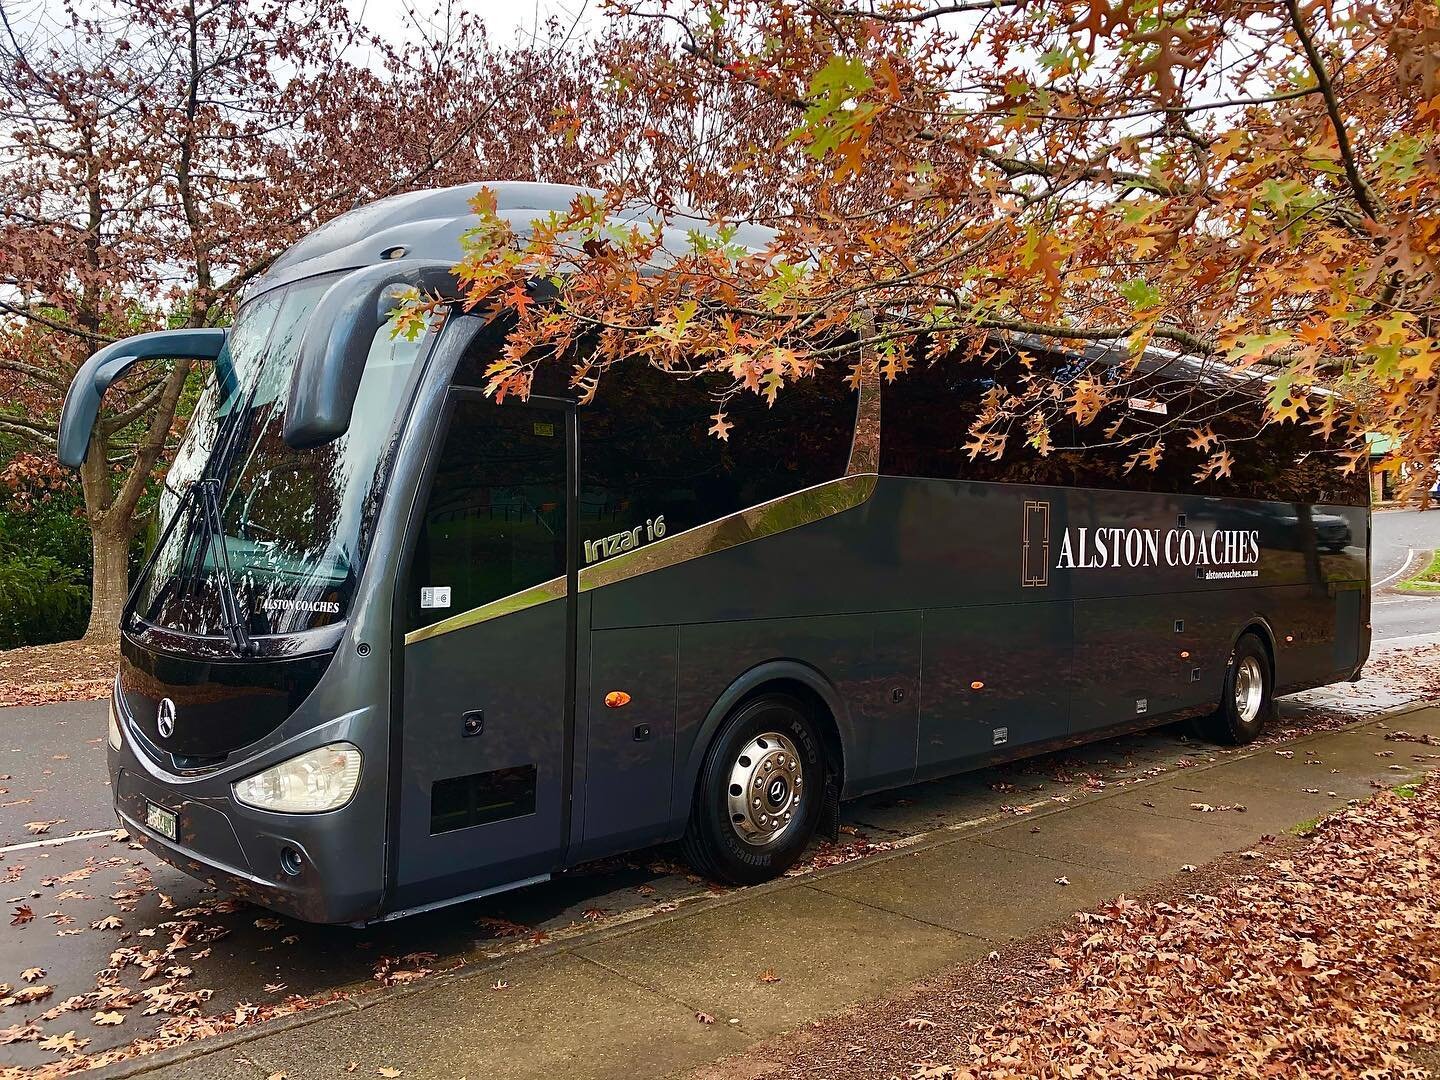 Autumn Leaves🍂 #autumn #leaves🍁 #autumnleaves #alstoncoaches #bus #busworldinternational #tourcoaches #schooltransportation #melbournetravel #tourismaustralia #victoria #luxurytraveler #luxurytravel #safetravels